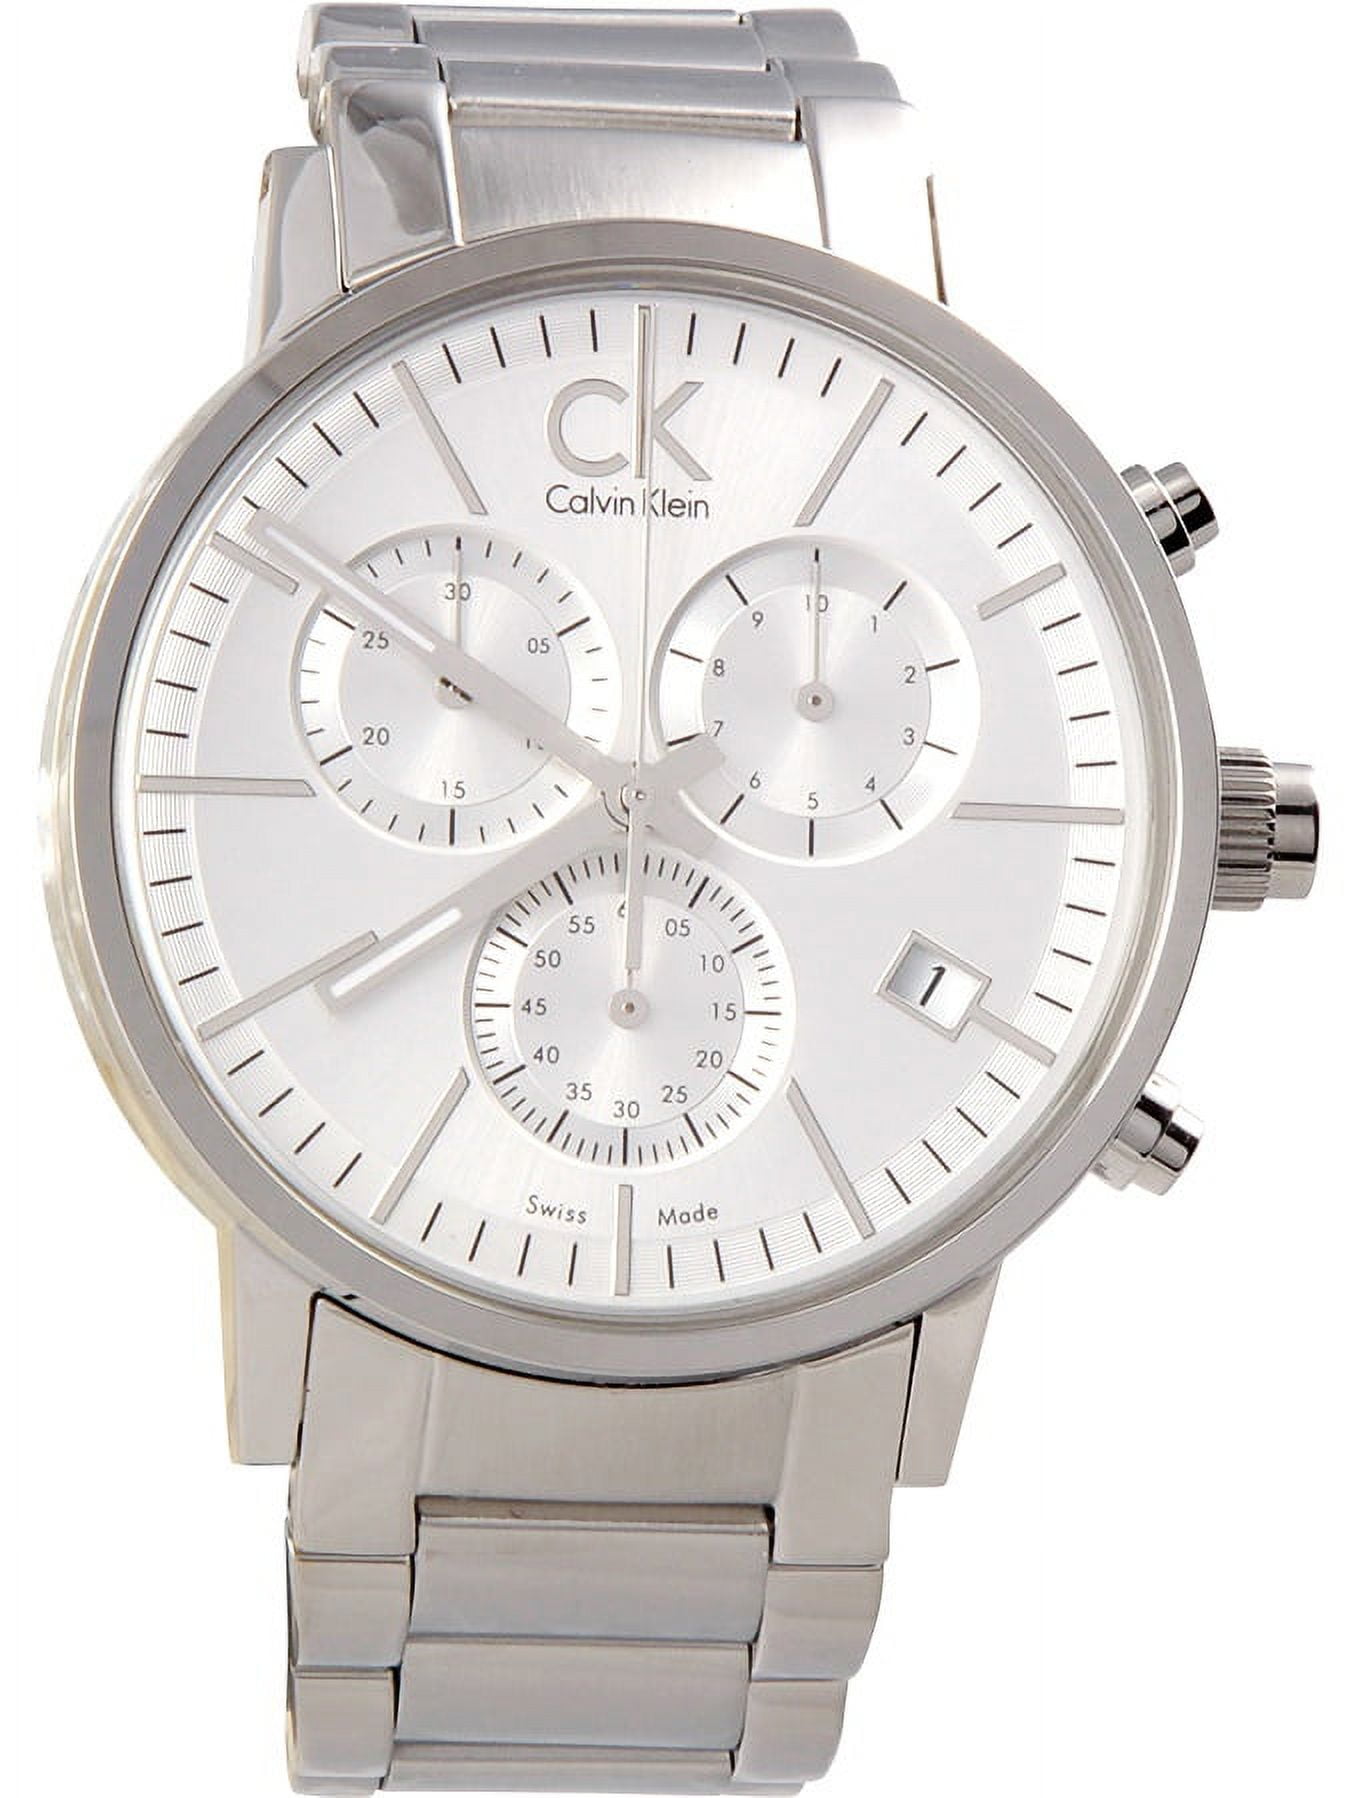 Calvin Klein Men's Chronograph Post Minimal Watch K7627126